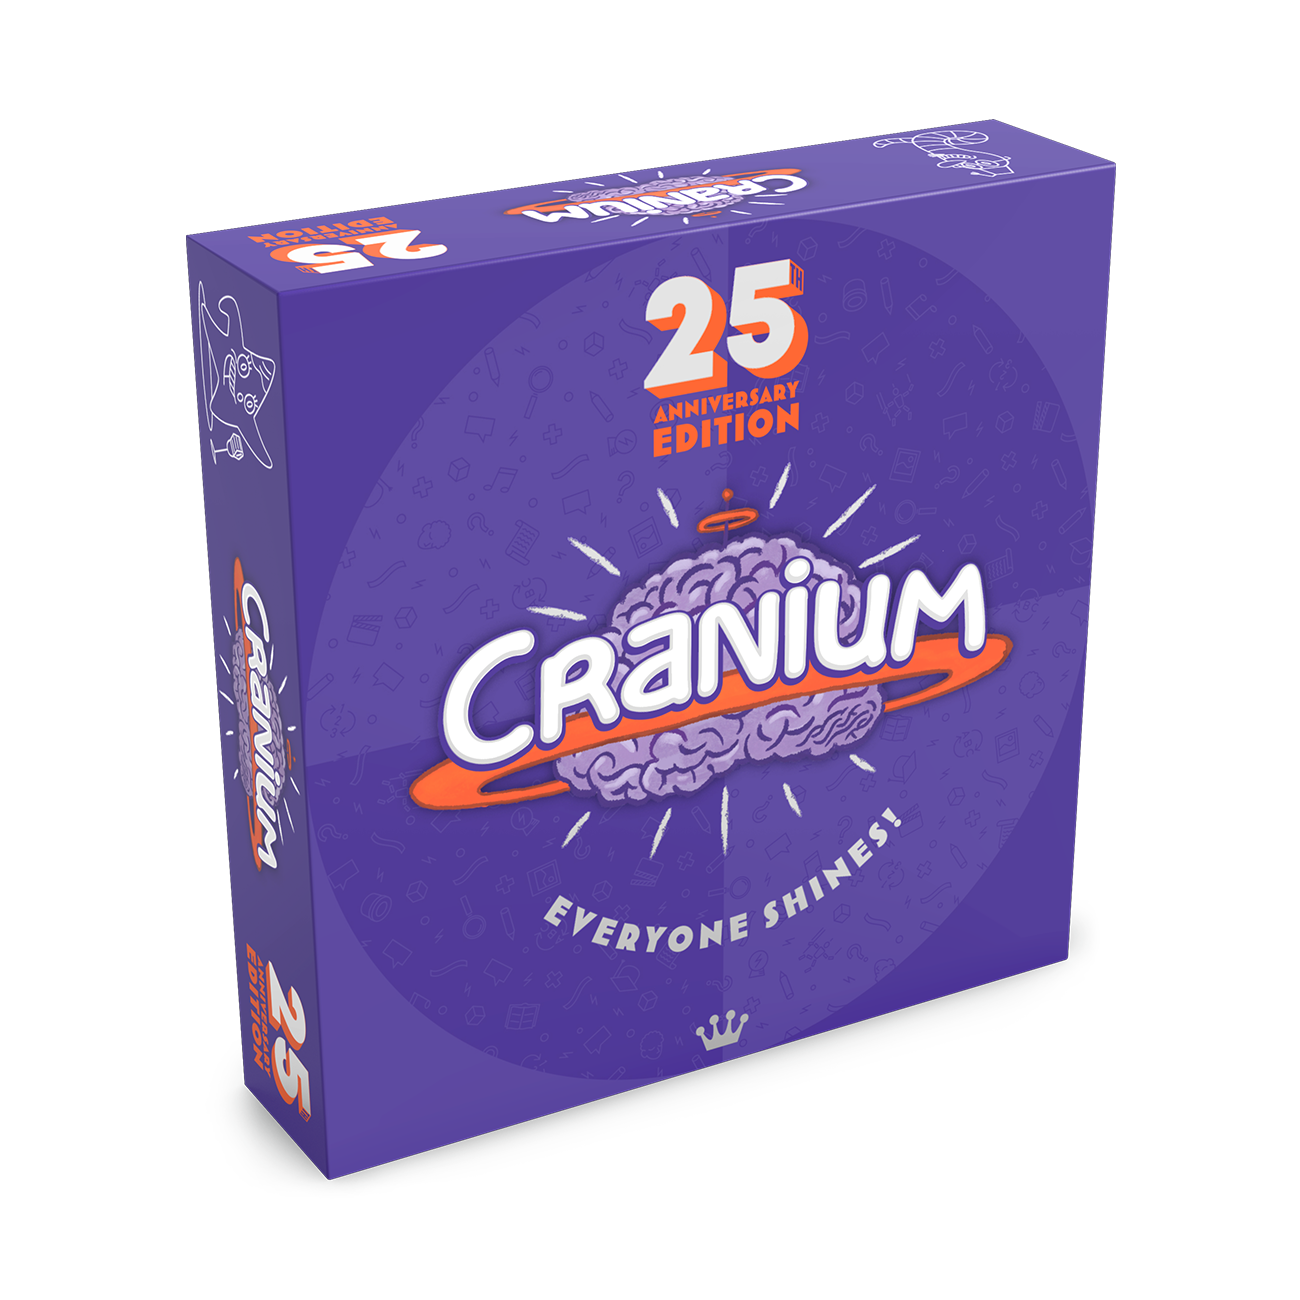 Cranium 25th Anniversary Edition box